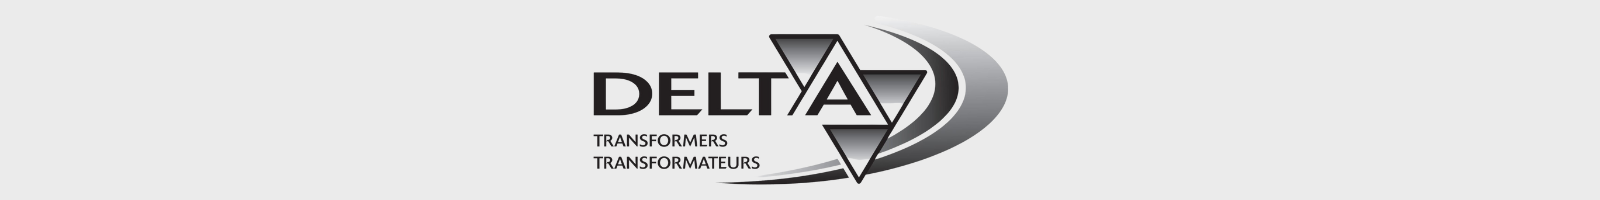 logo transformateurs delta